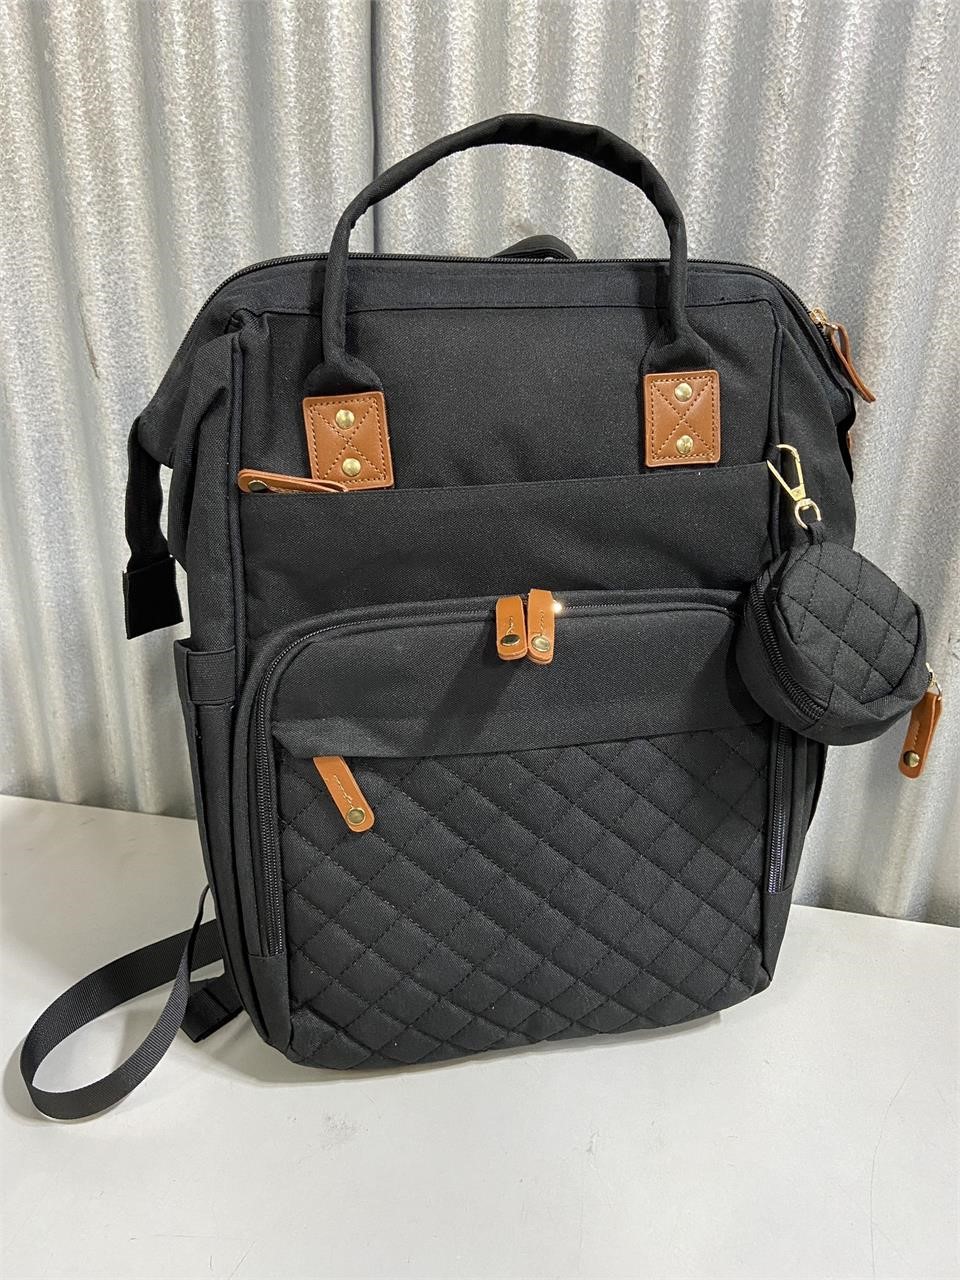 Diaper Bag Backpack - Tote - Multi function Black